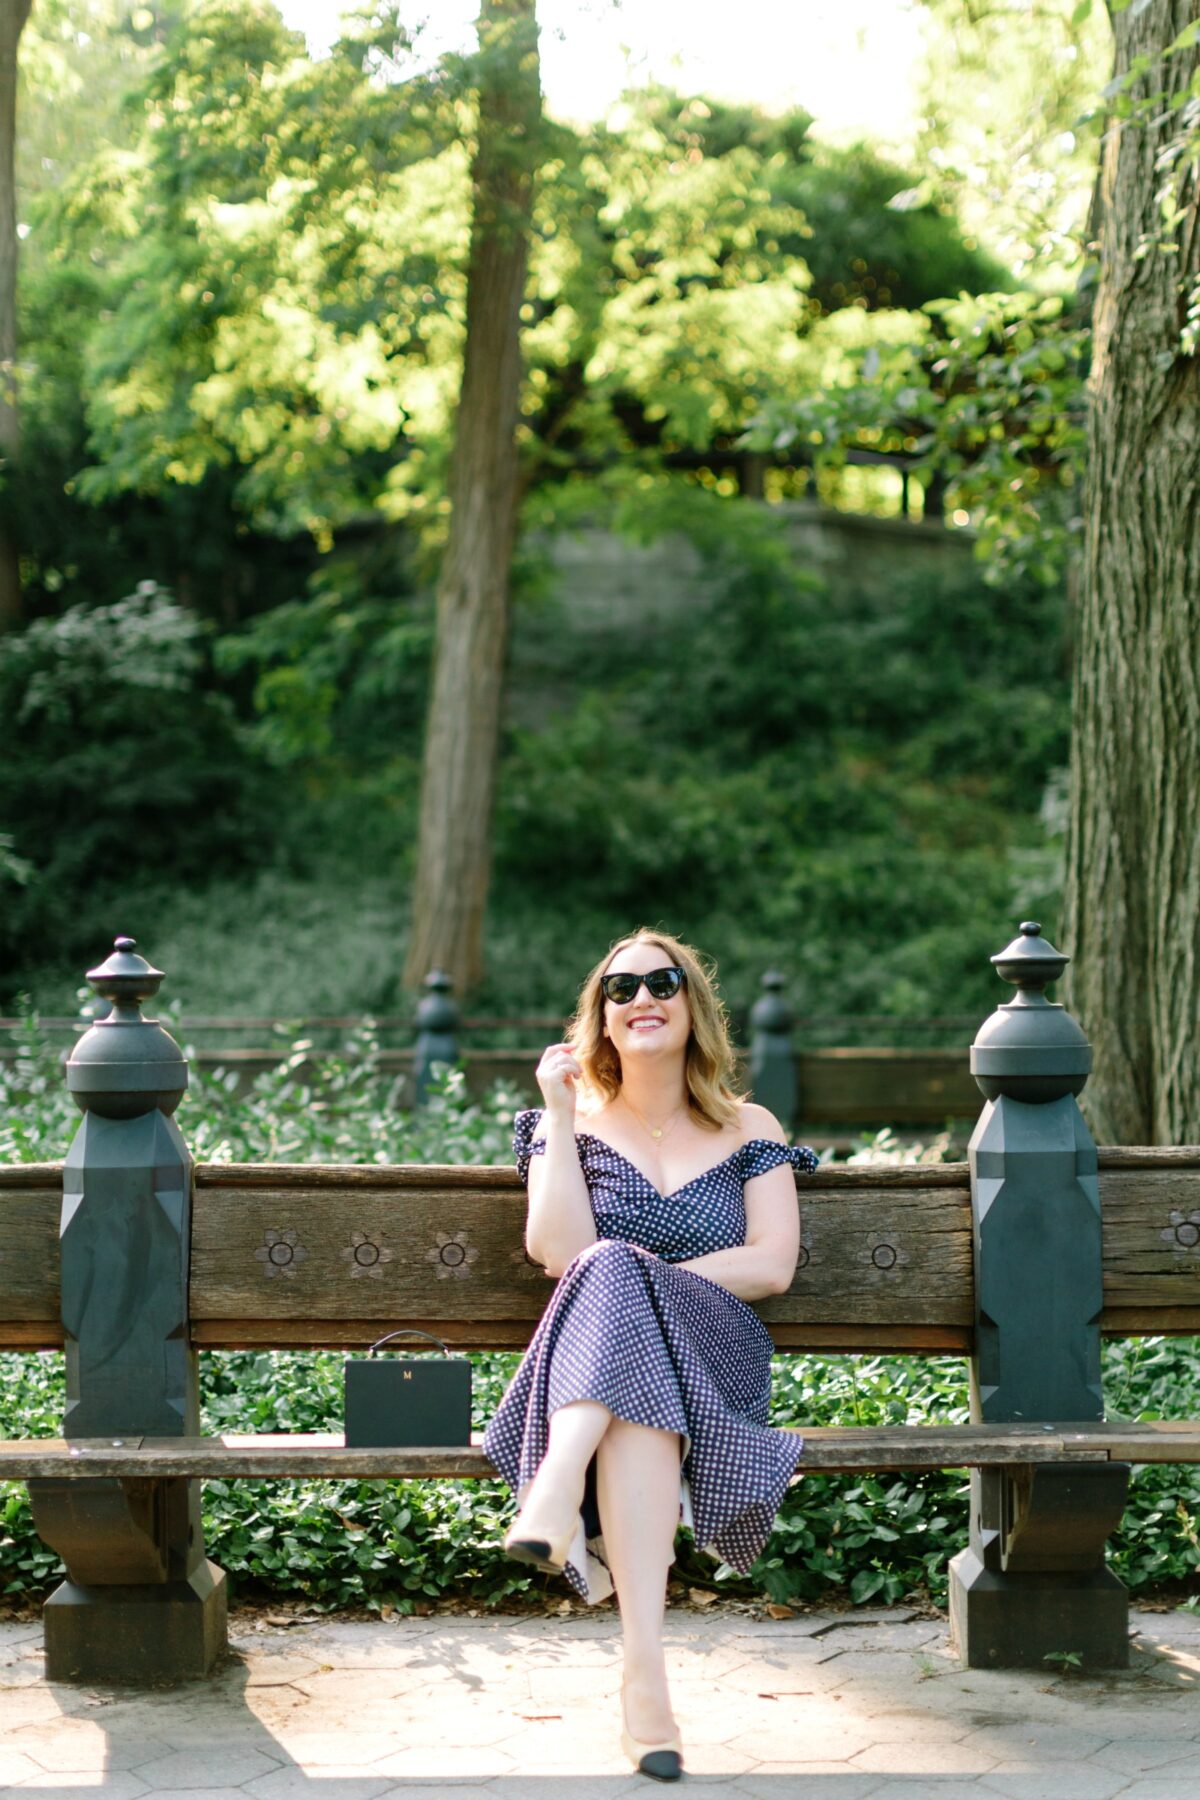 Central Park I wit & whimsy